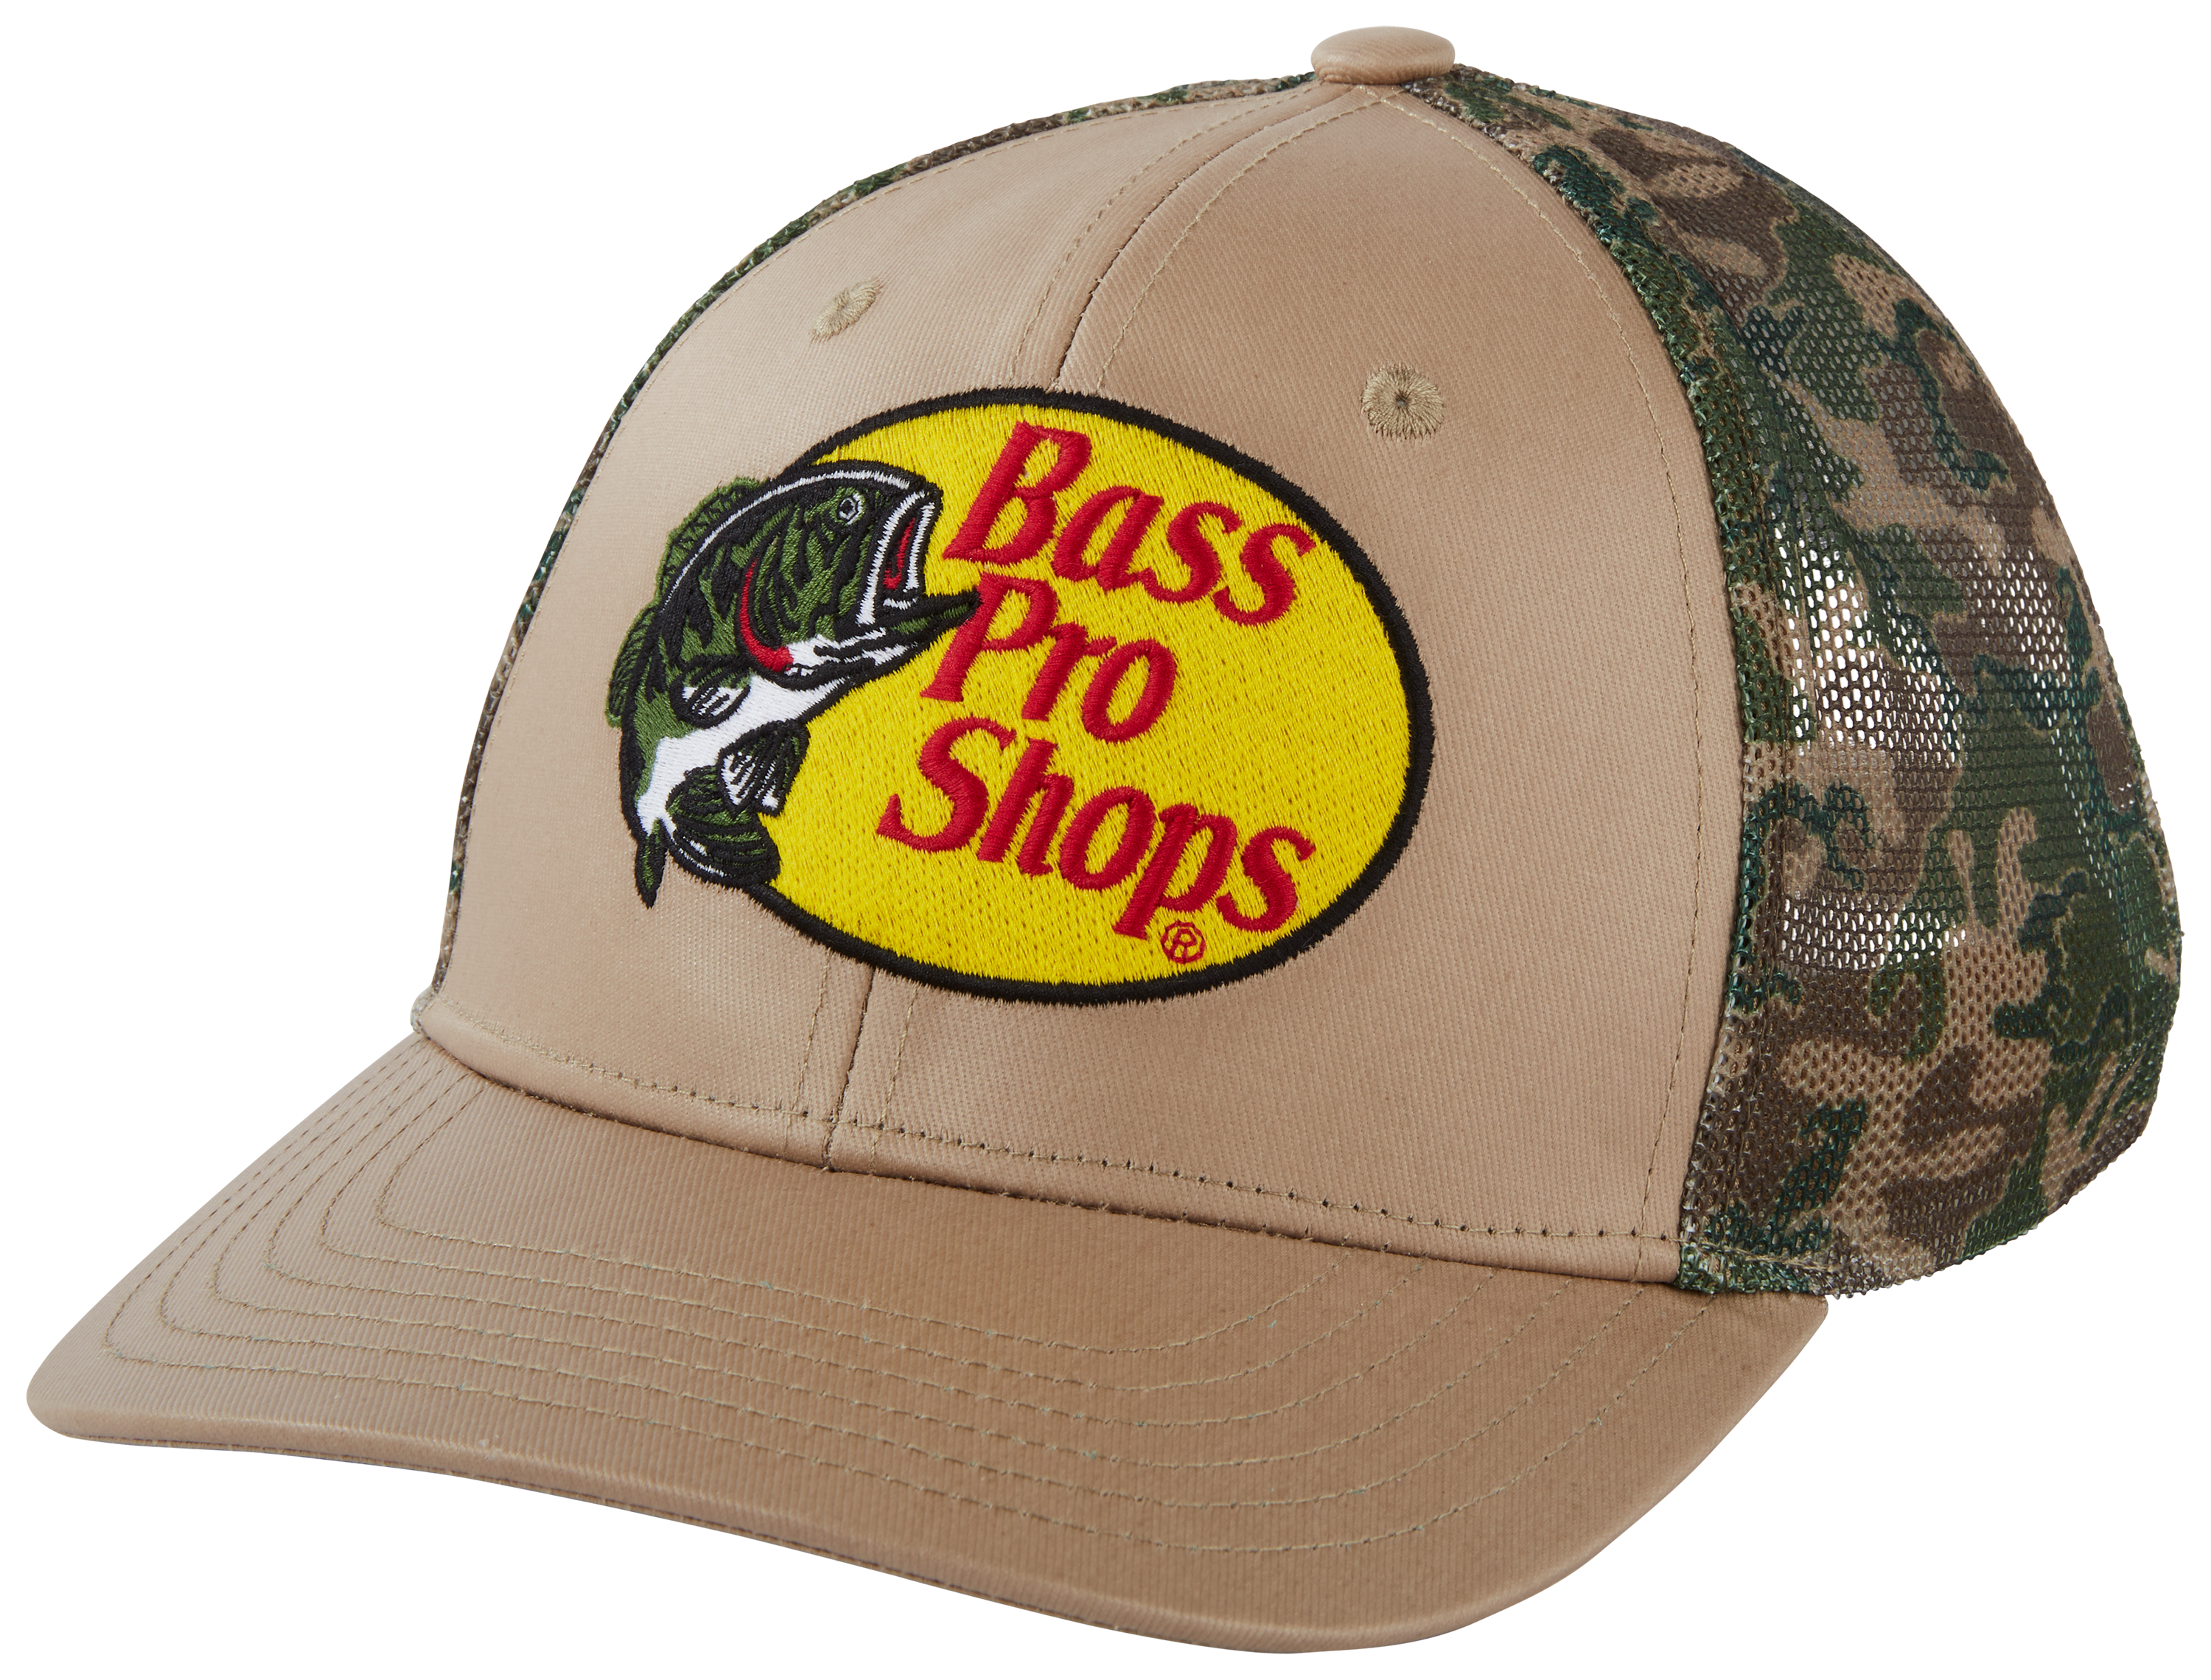 Bass Pro Shops Camo Print Mesh-Back Cap